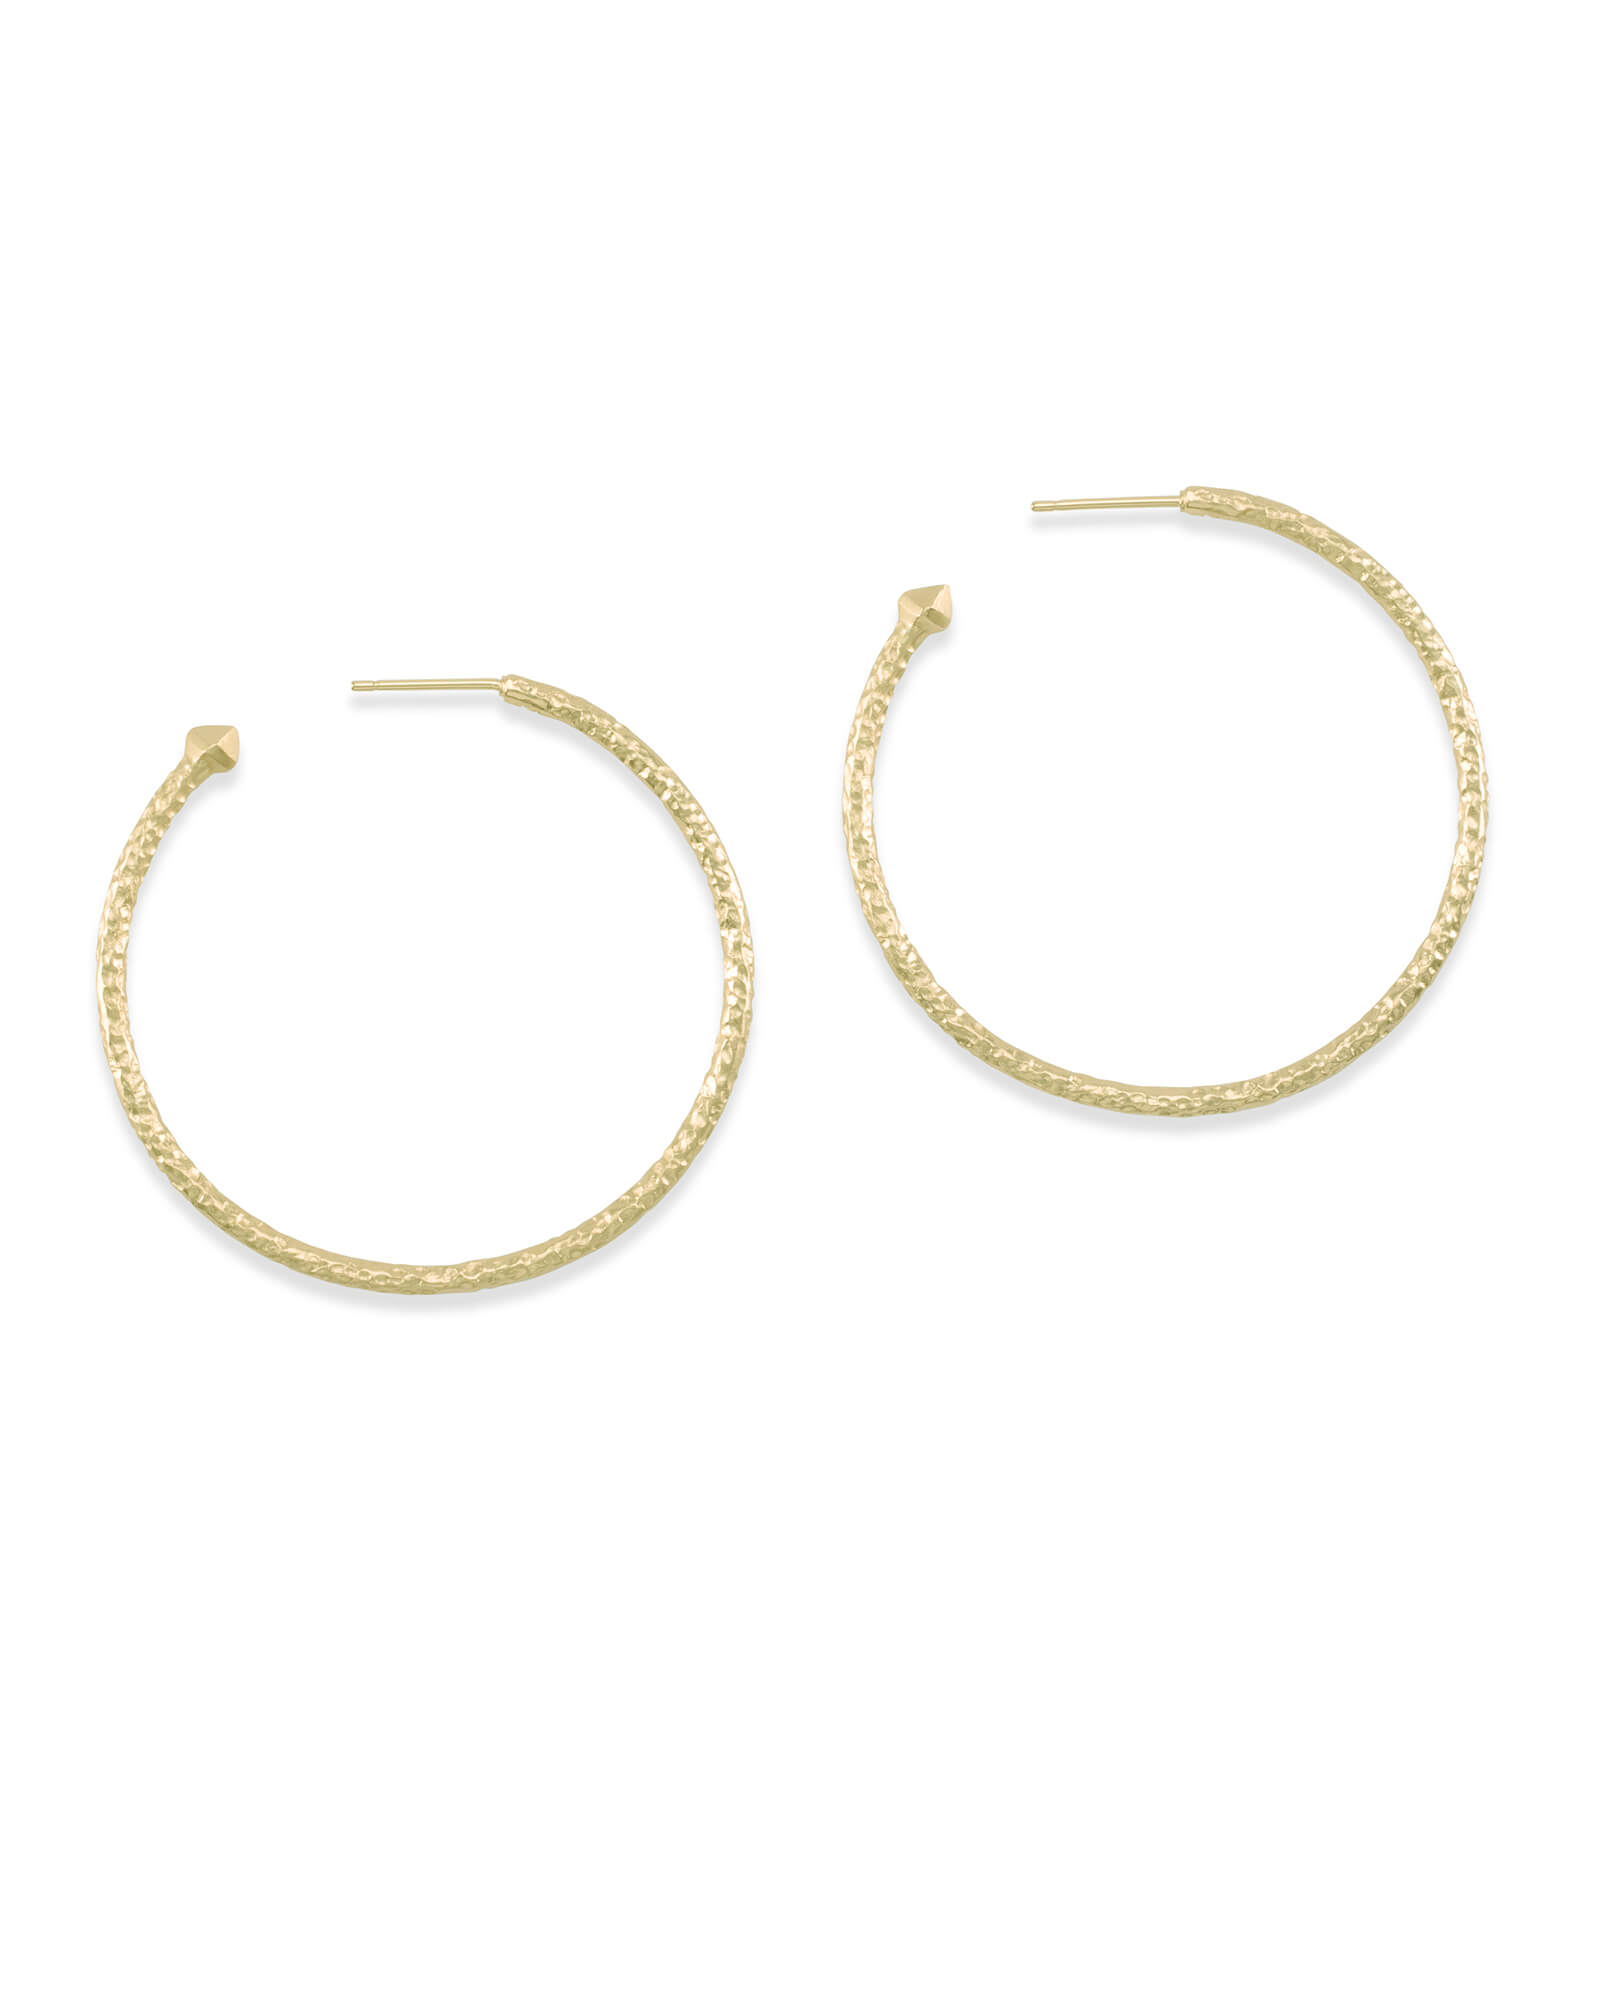 Macys Small Hammered Hoop Earrings in 14k Yellow Gold or White Gold   Macys